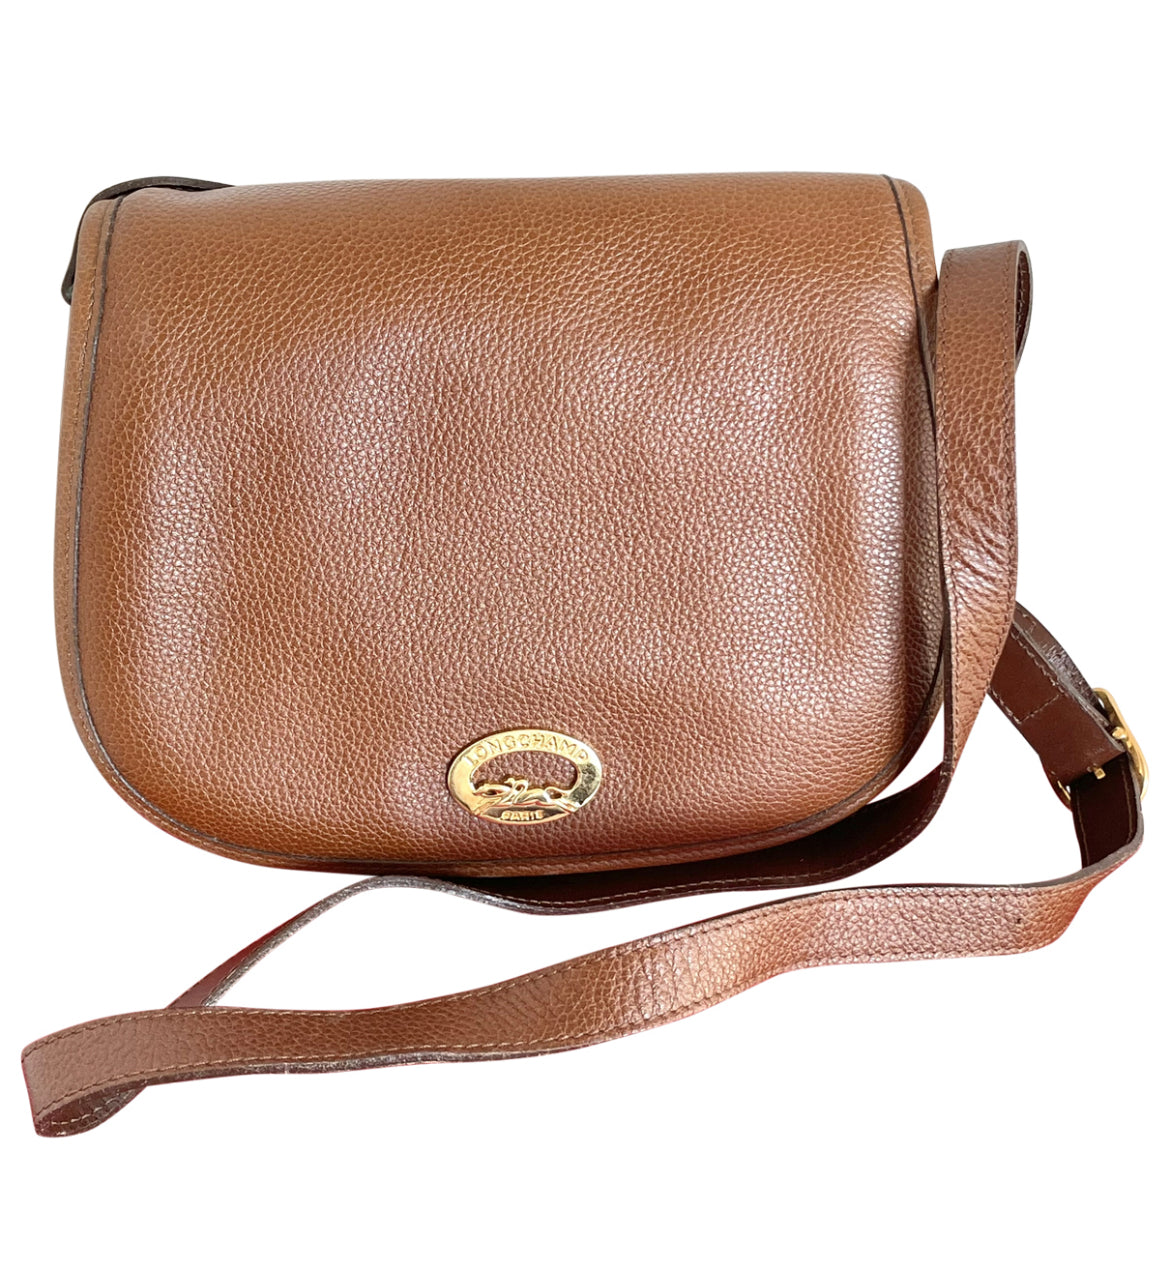 Etro Authenticated Leather Handbag